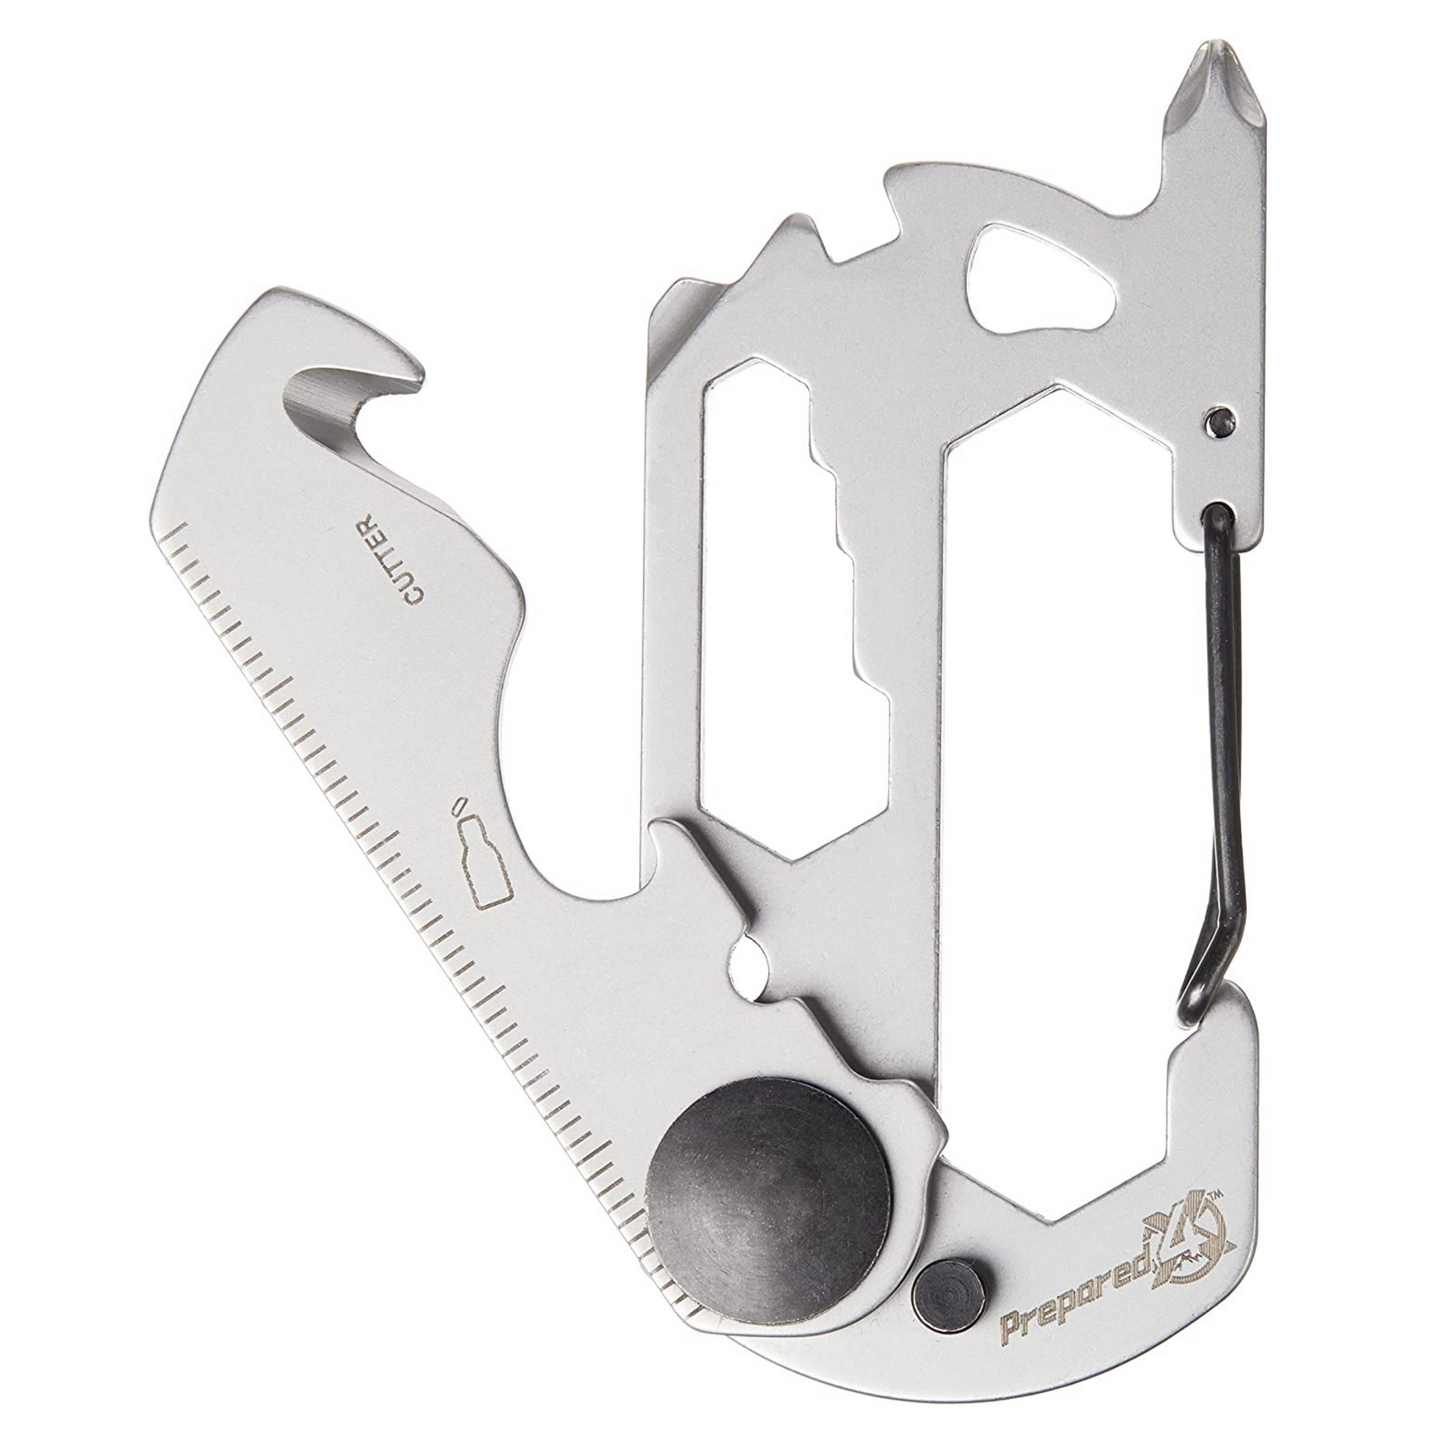 Multitool Keychain Carabiner - Accessories